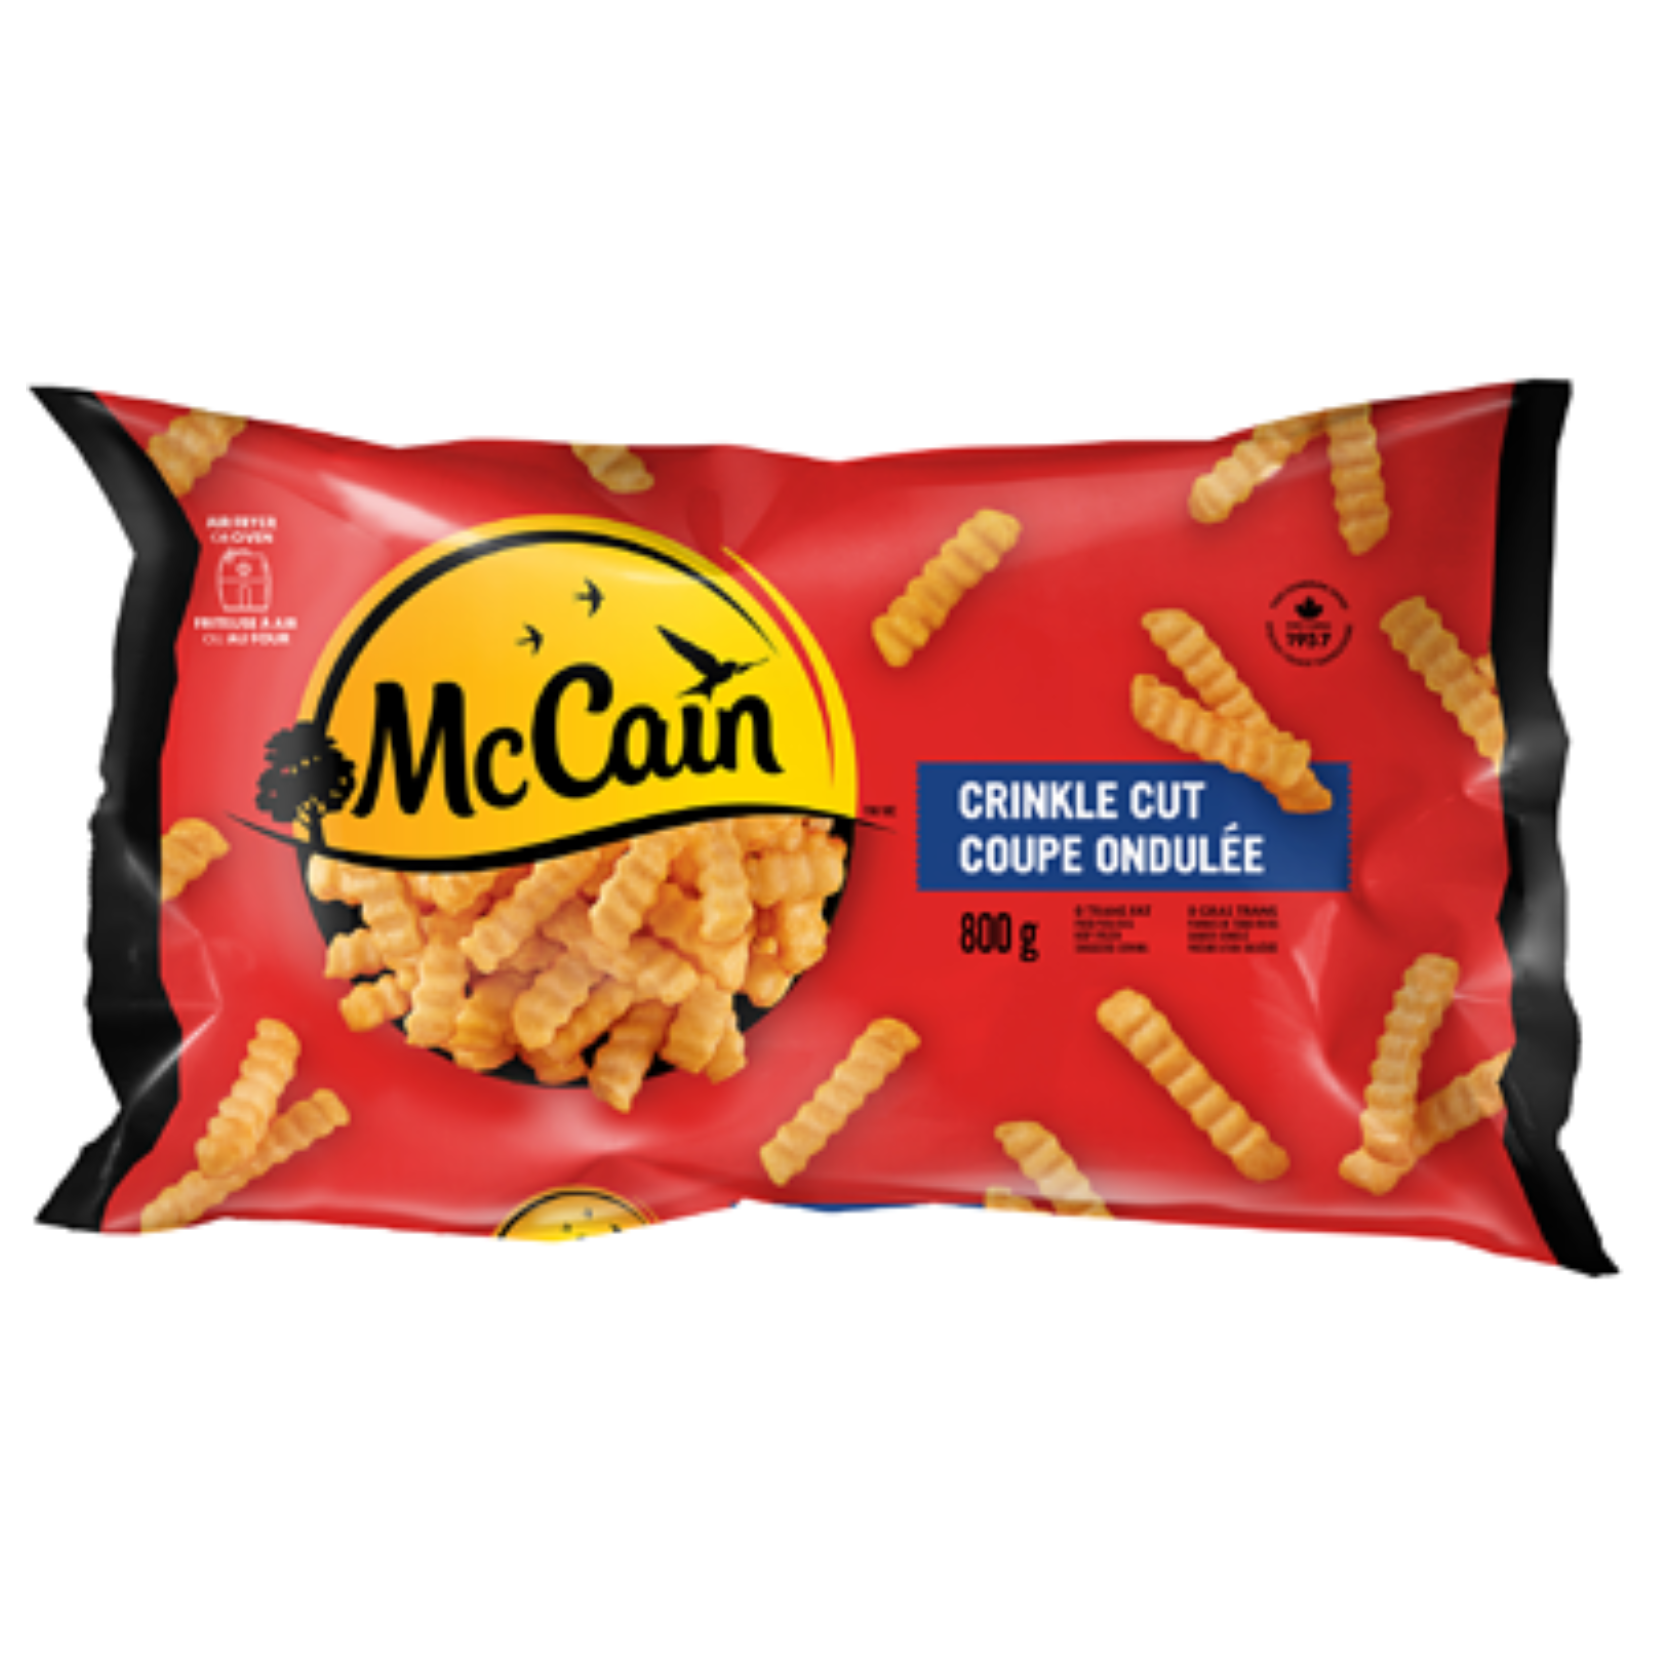 McCain Crinkle Cut Fries 800g